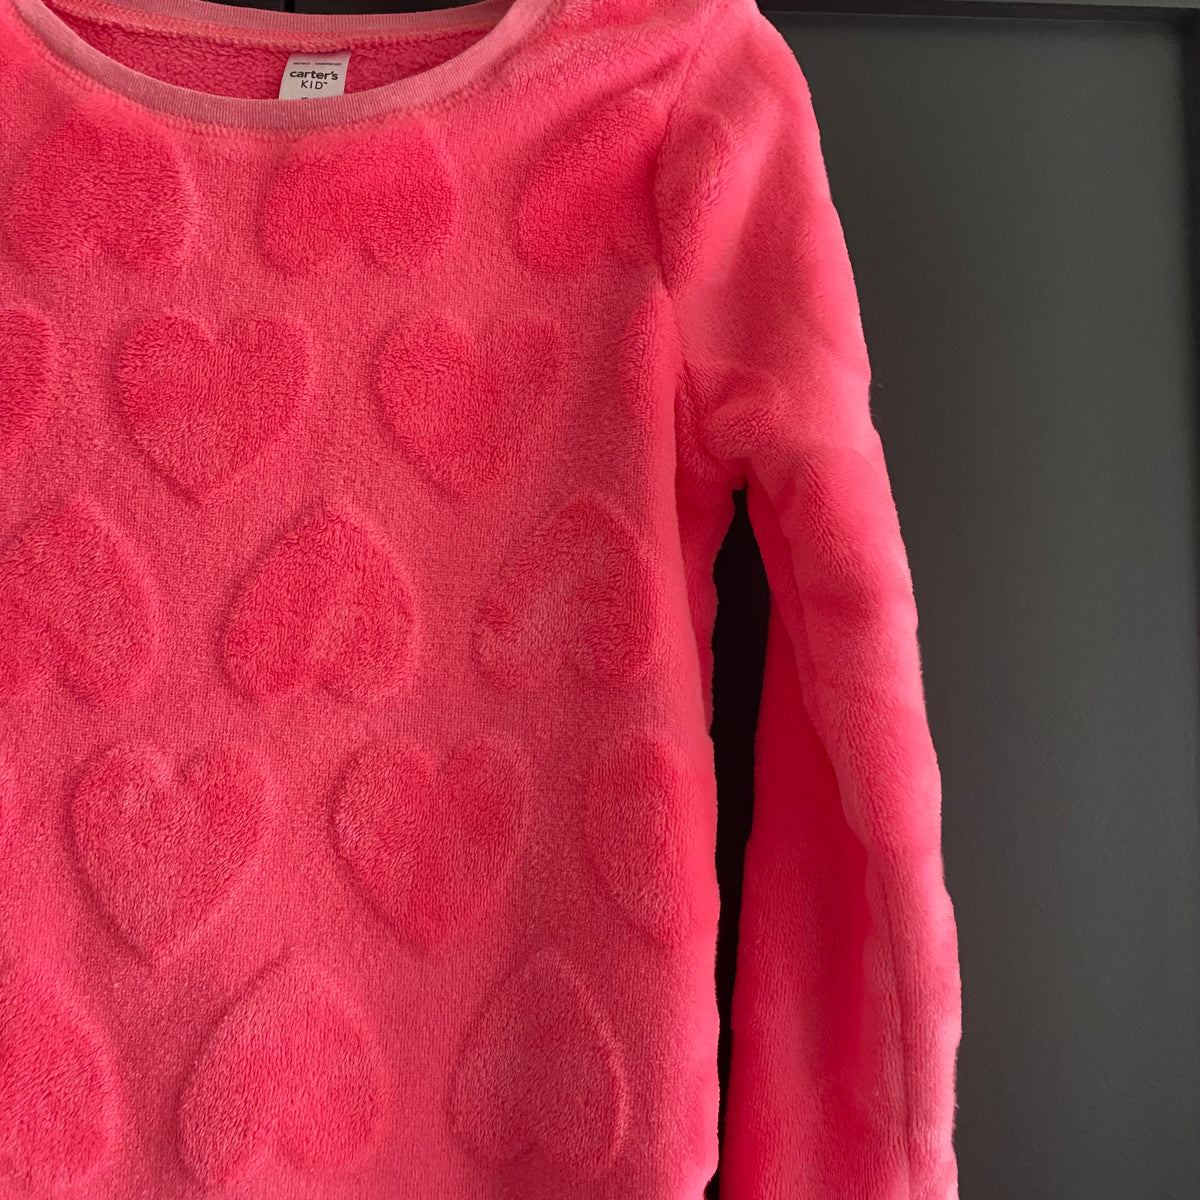 Sweater (Girls Size 10)